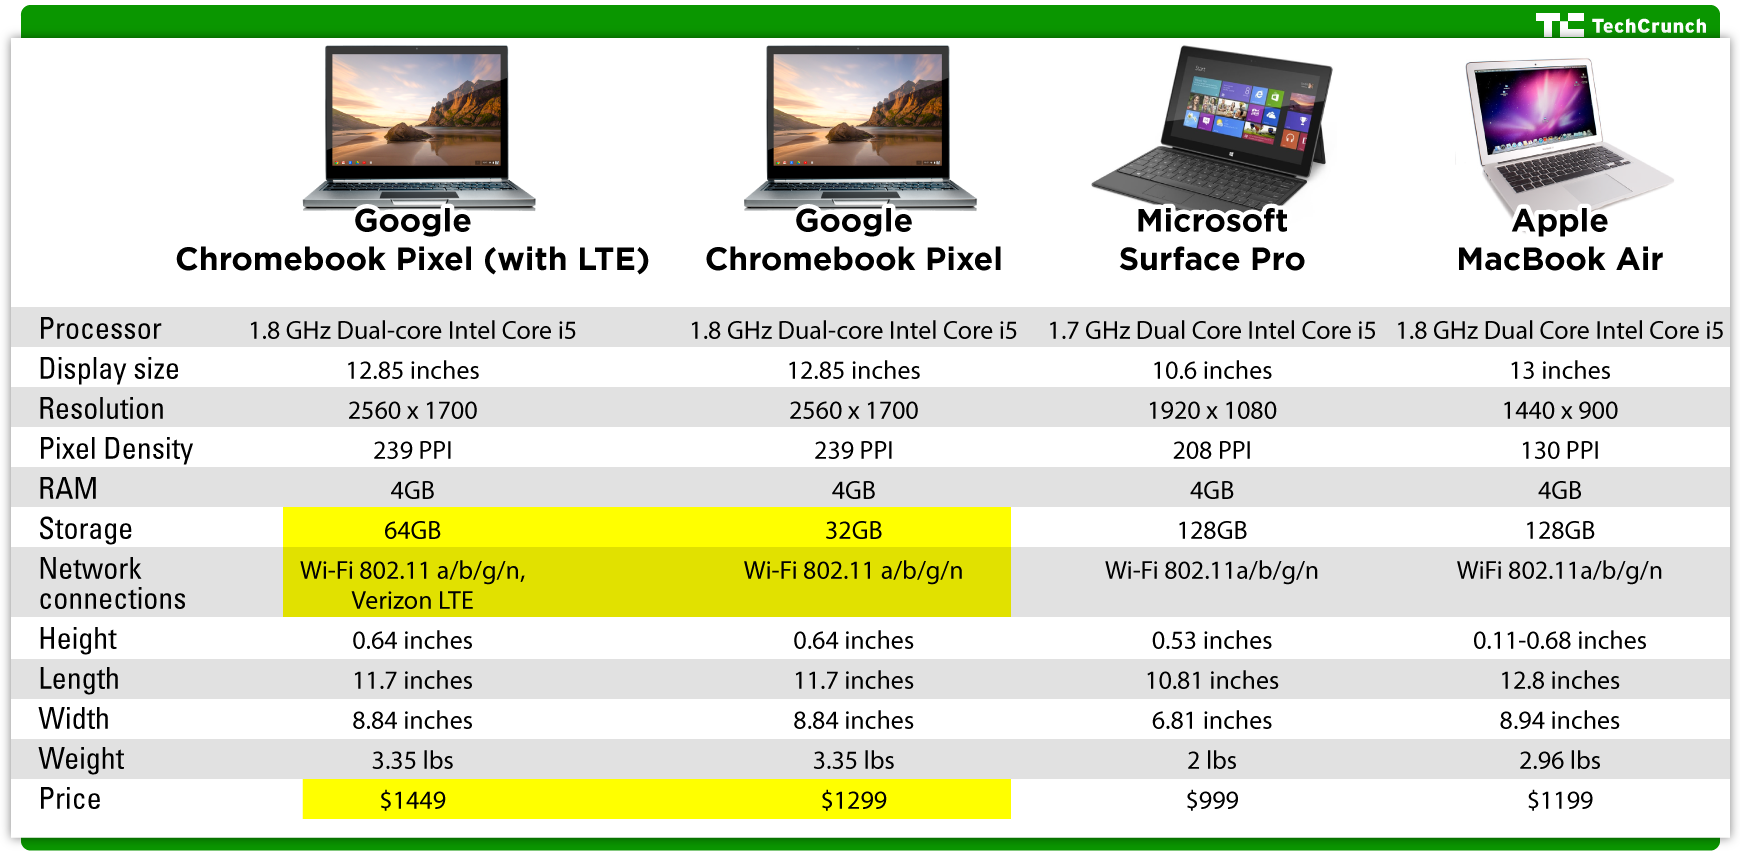 Google Chromebook Pixel comparison